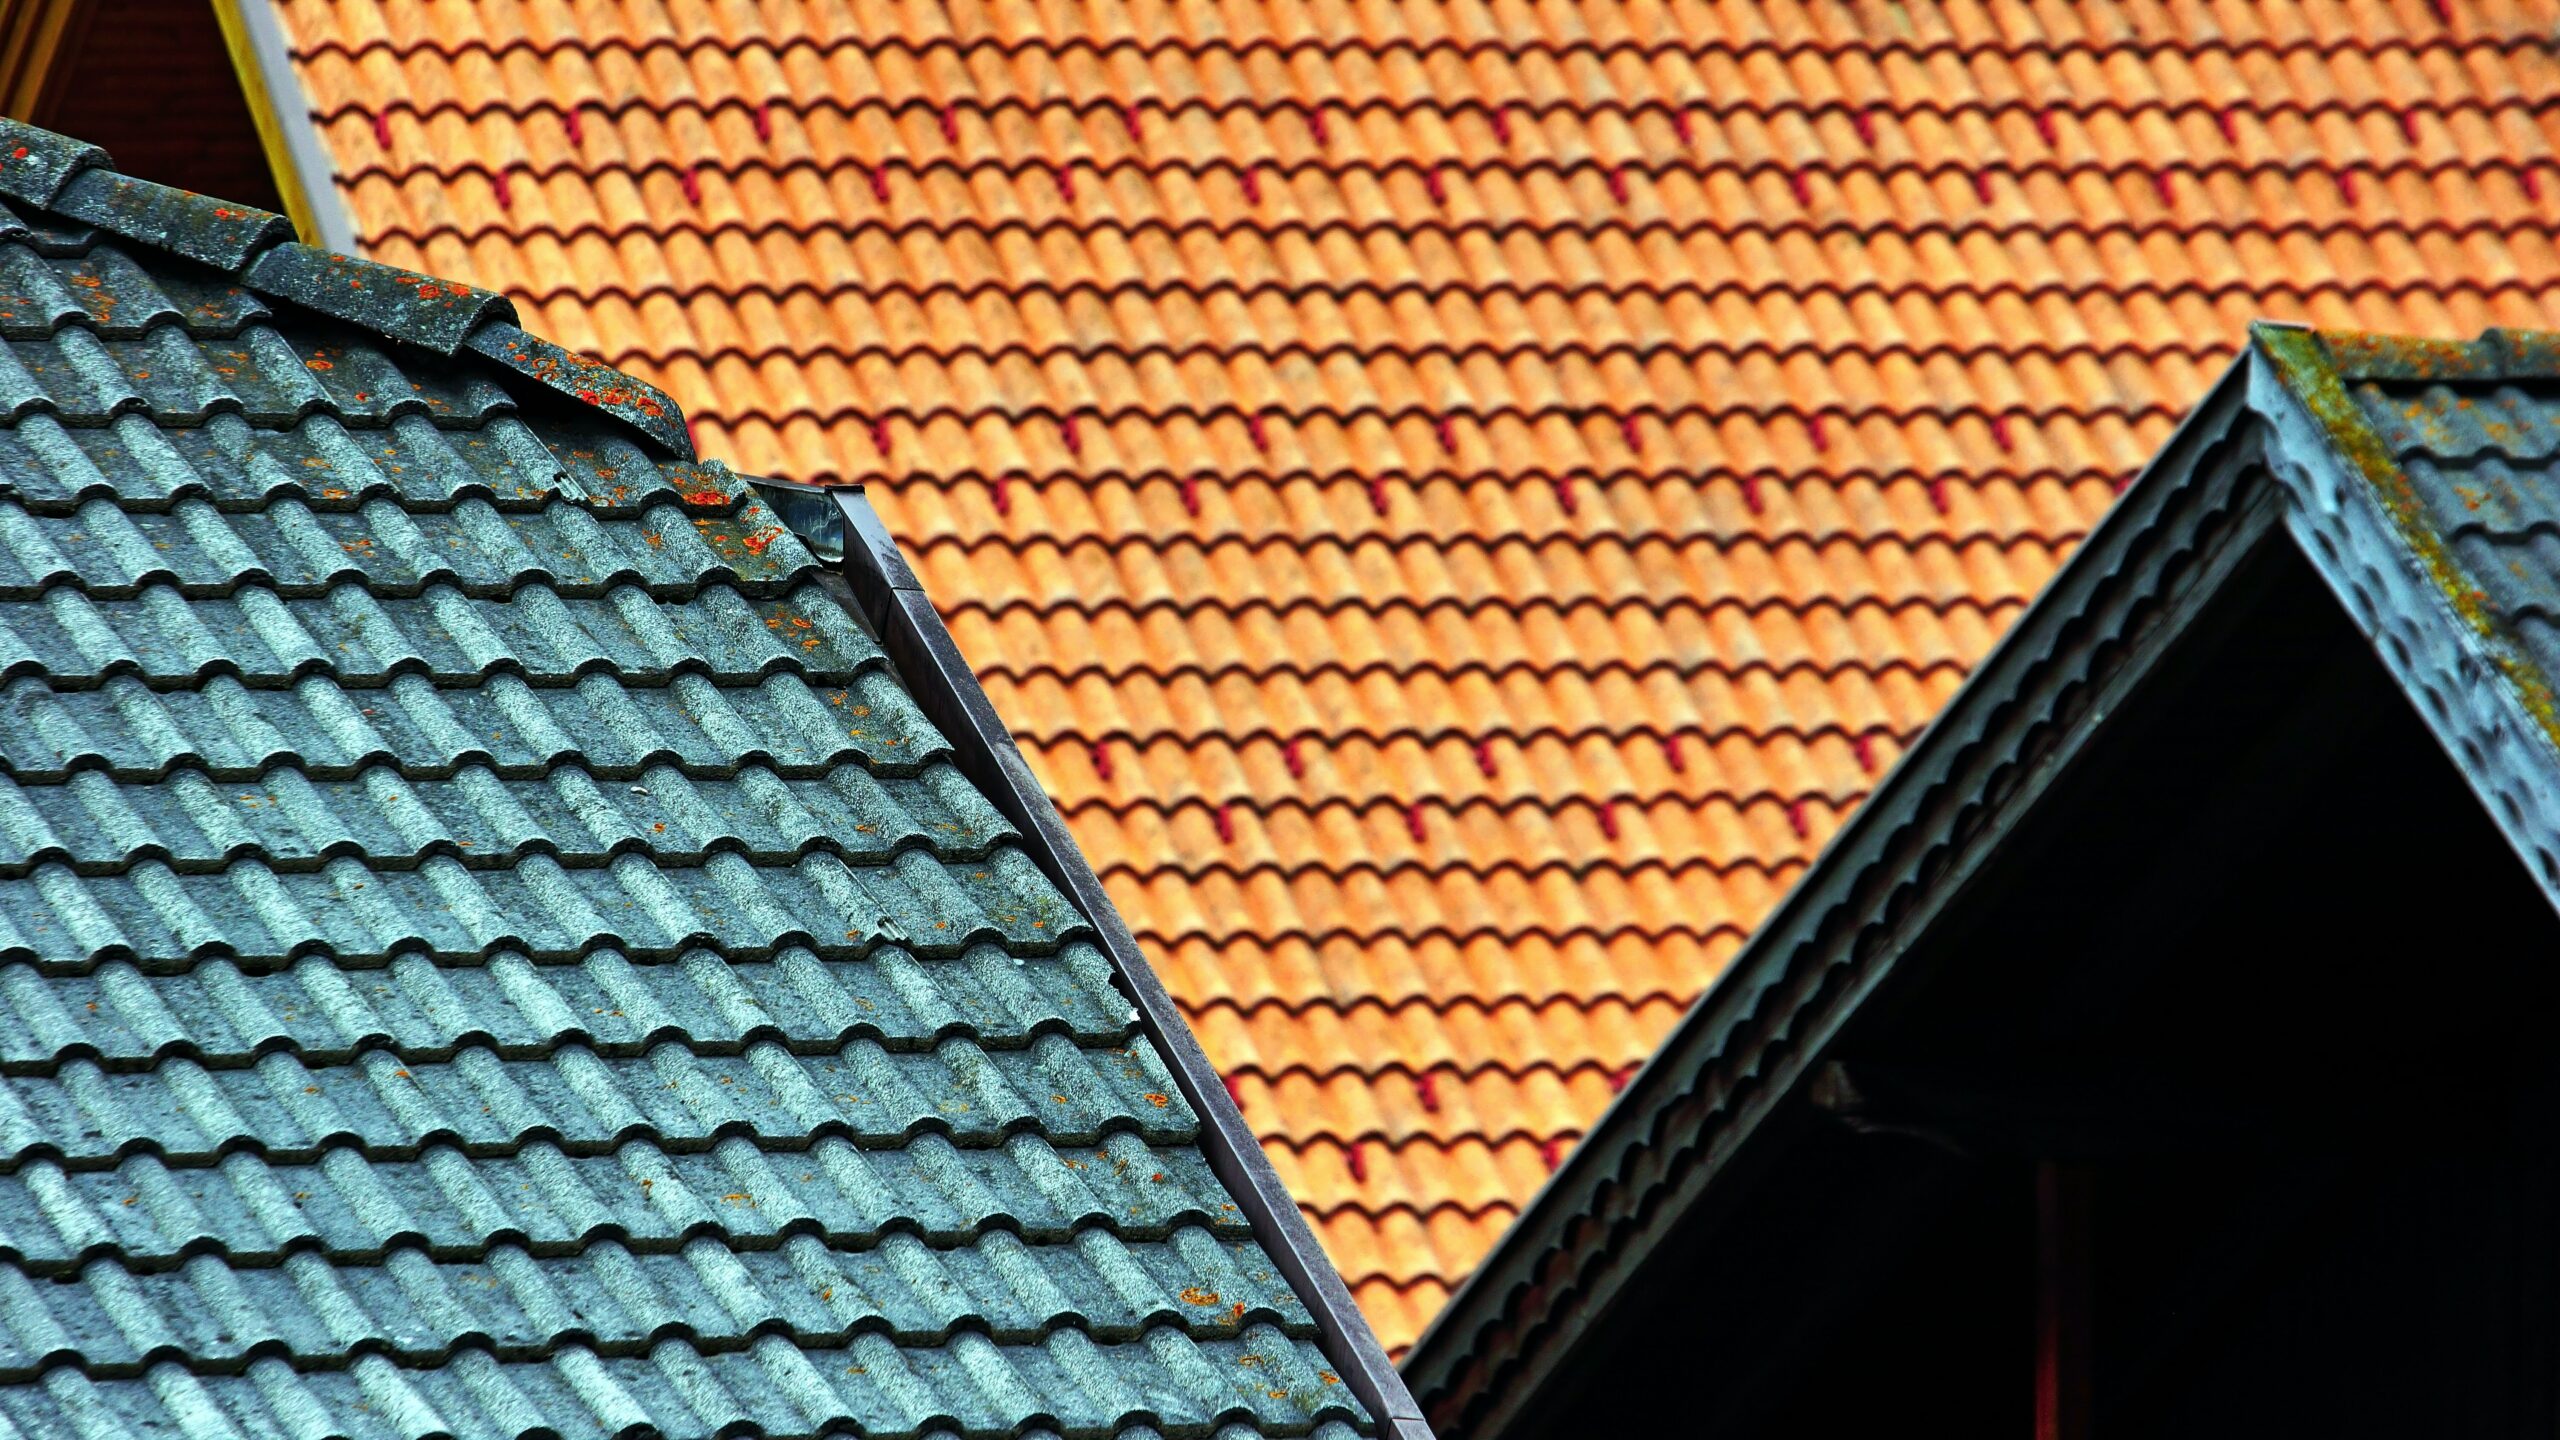  Basics Of Roof Maintenance 